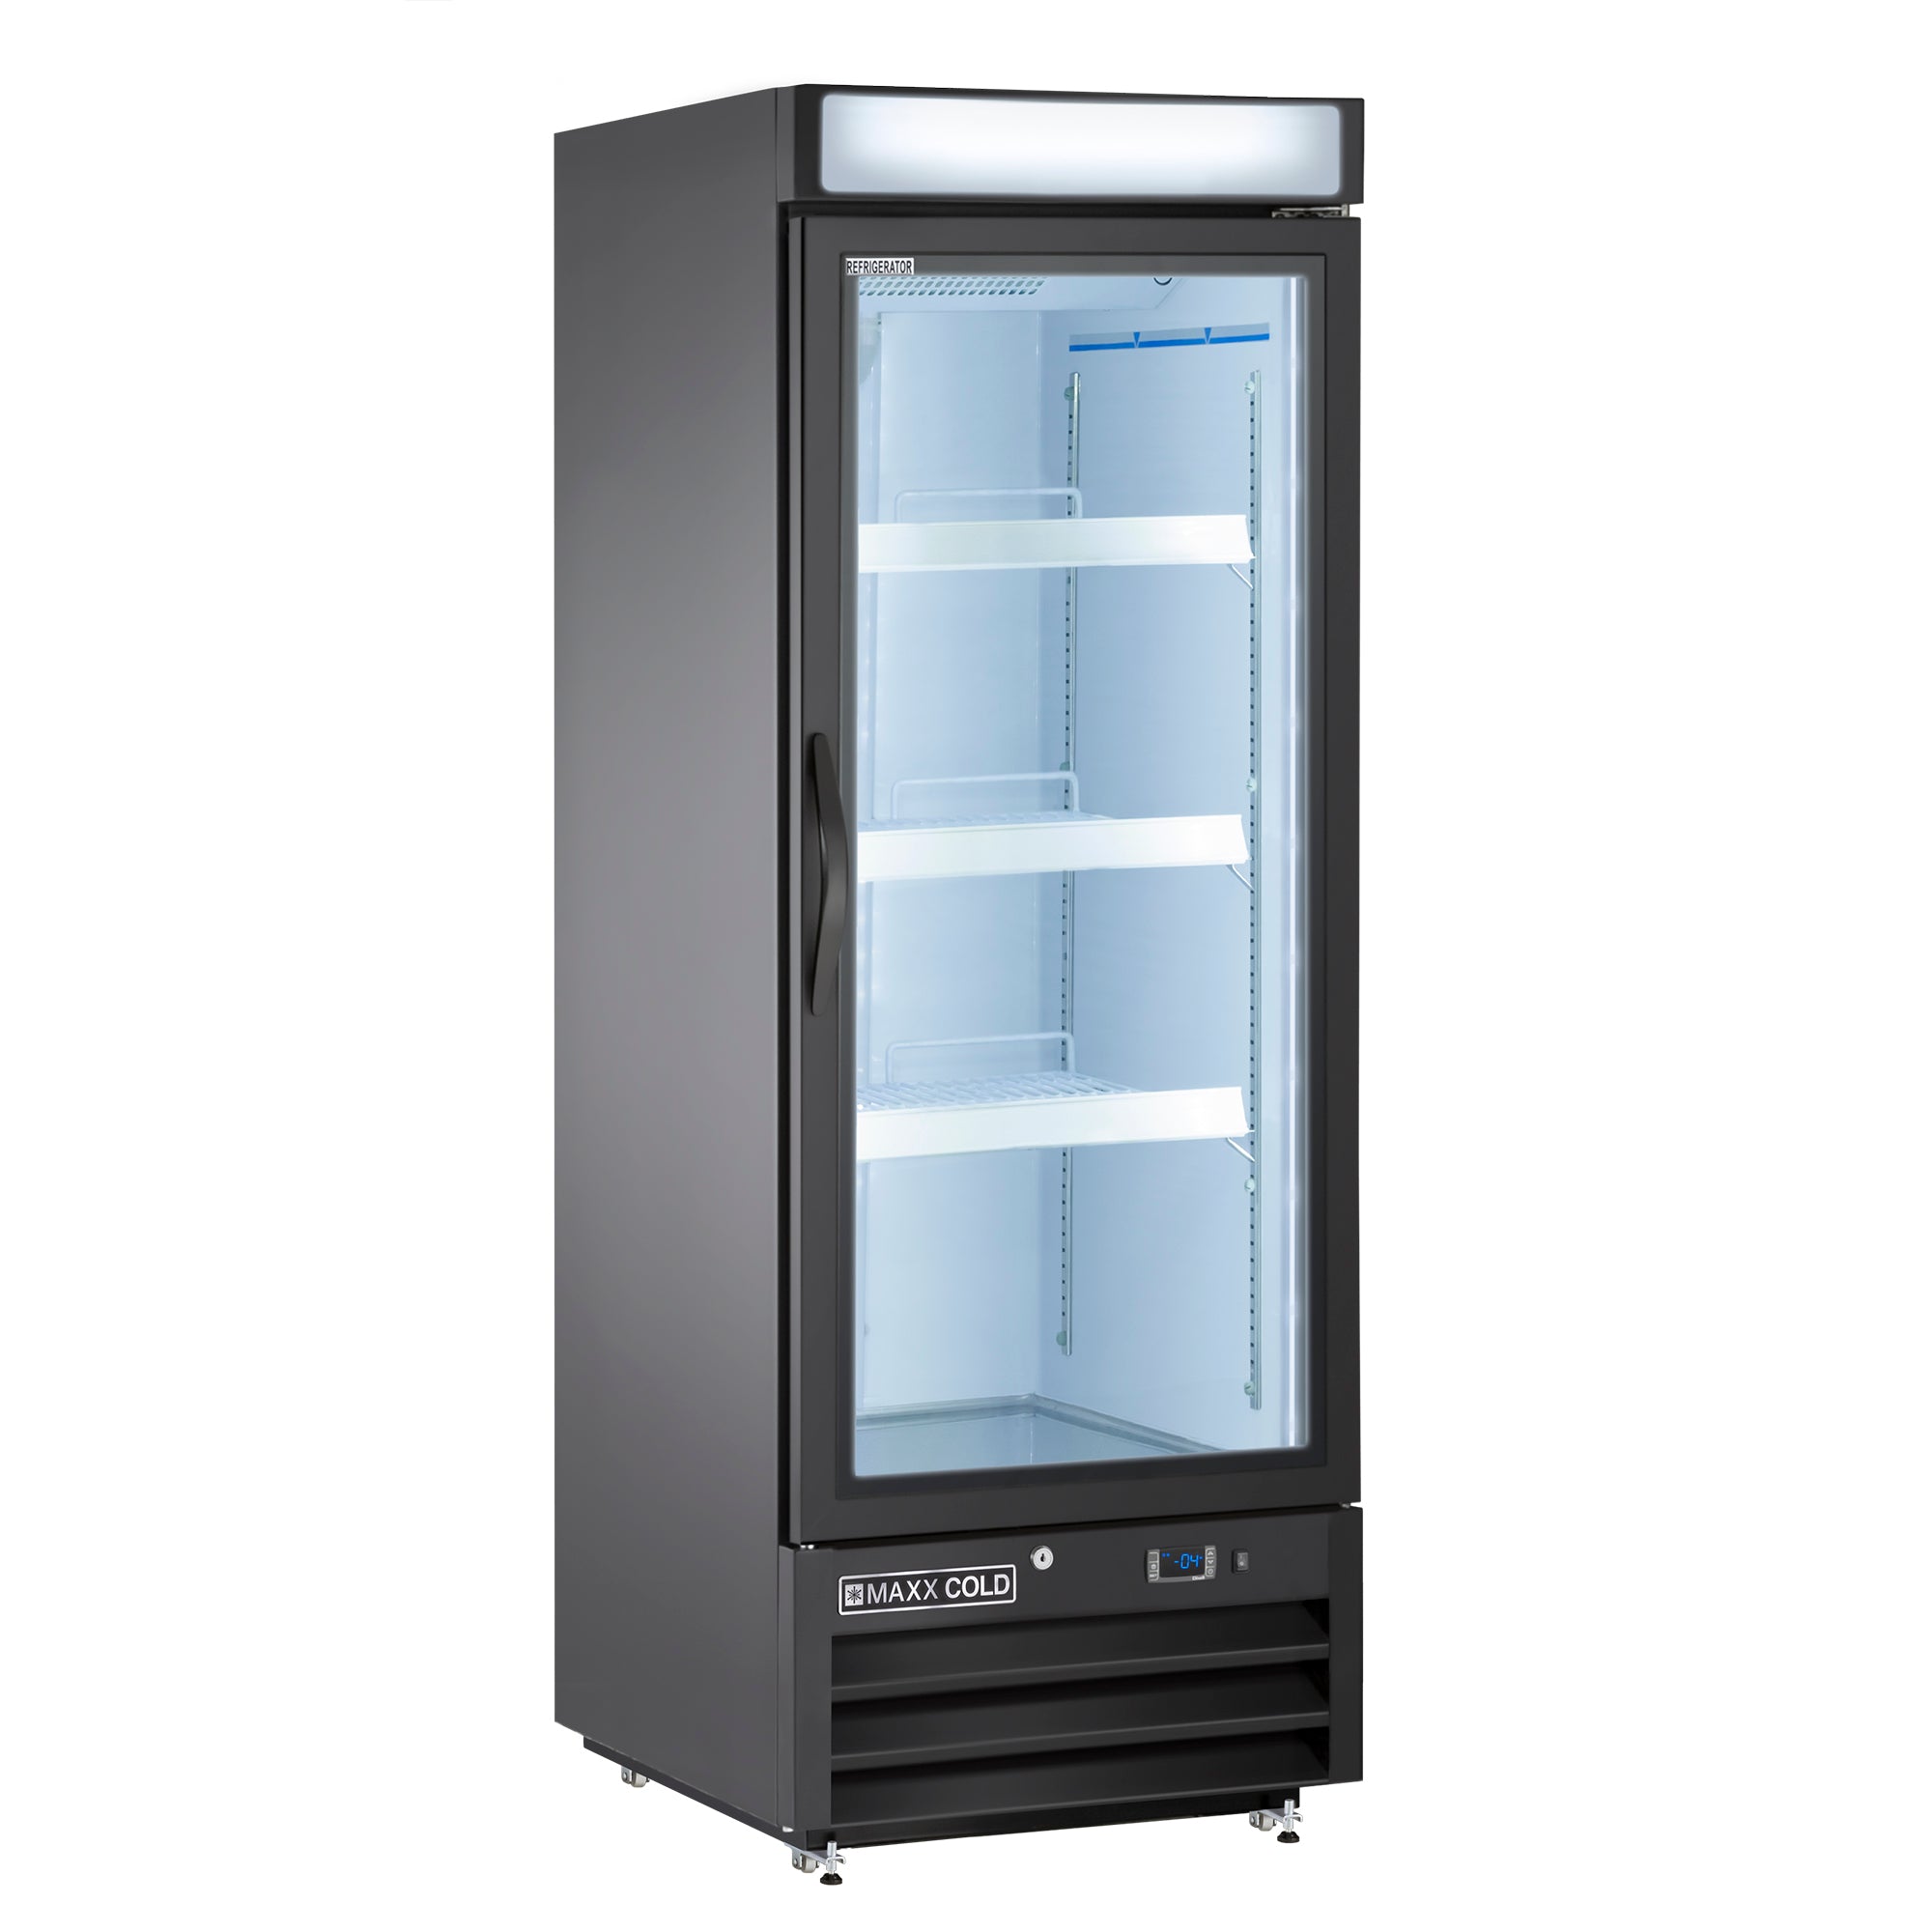 Maxx Cold - MXM1-16FBHC, Maxx Cold Single Glass Door Merchandiser Freezer, Free Standing, 25"W, 16 cu. ft. Storage Capacity, in Black